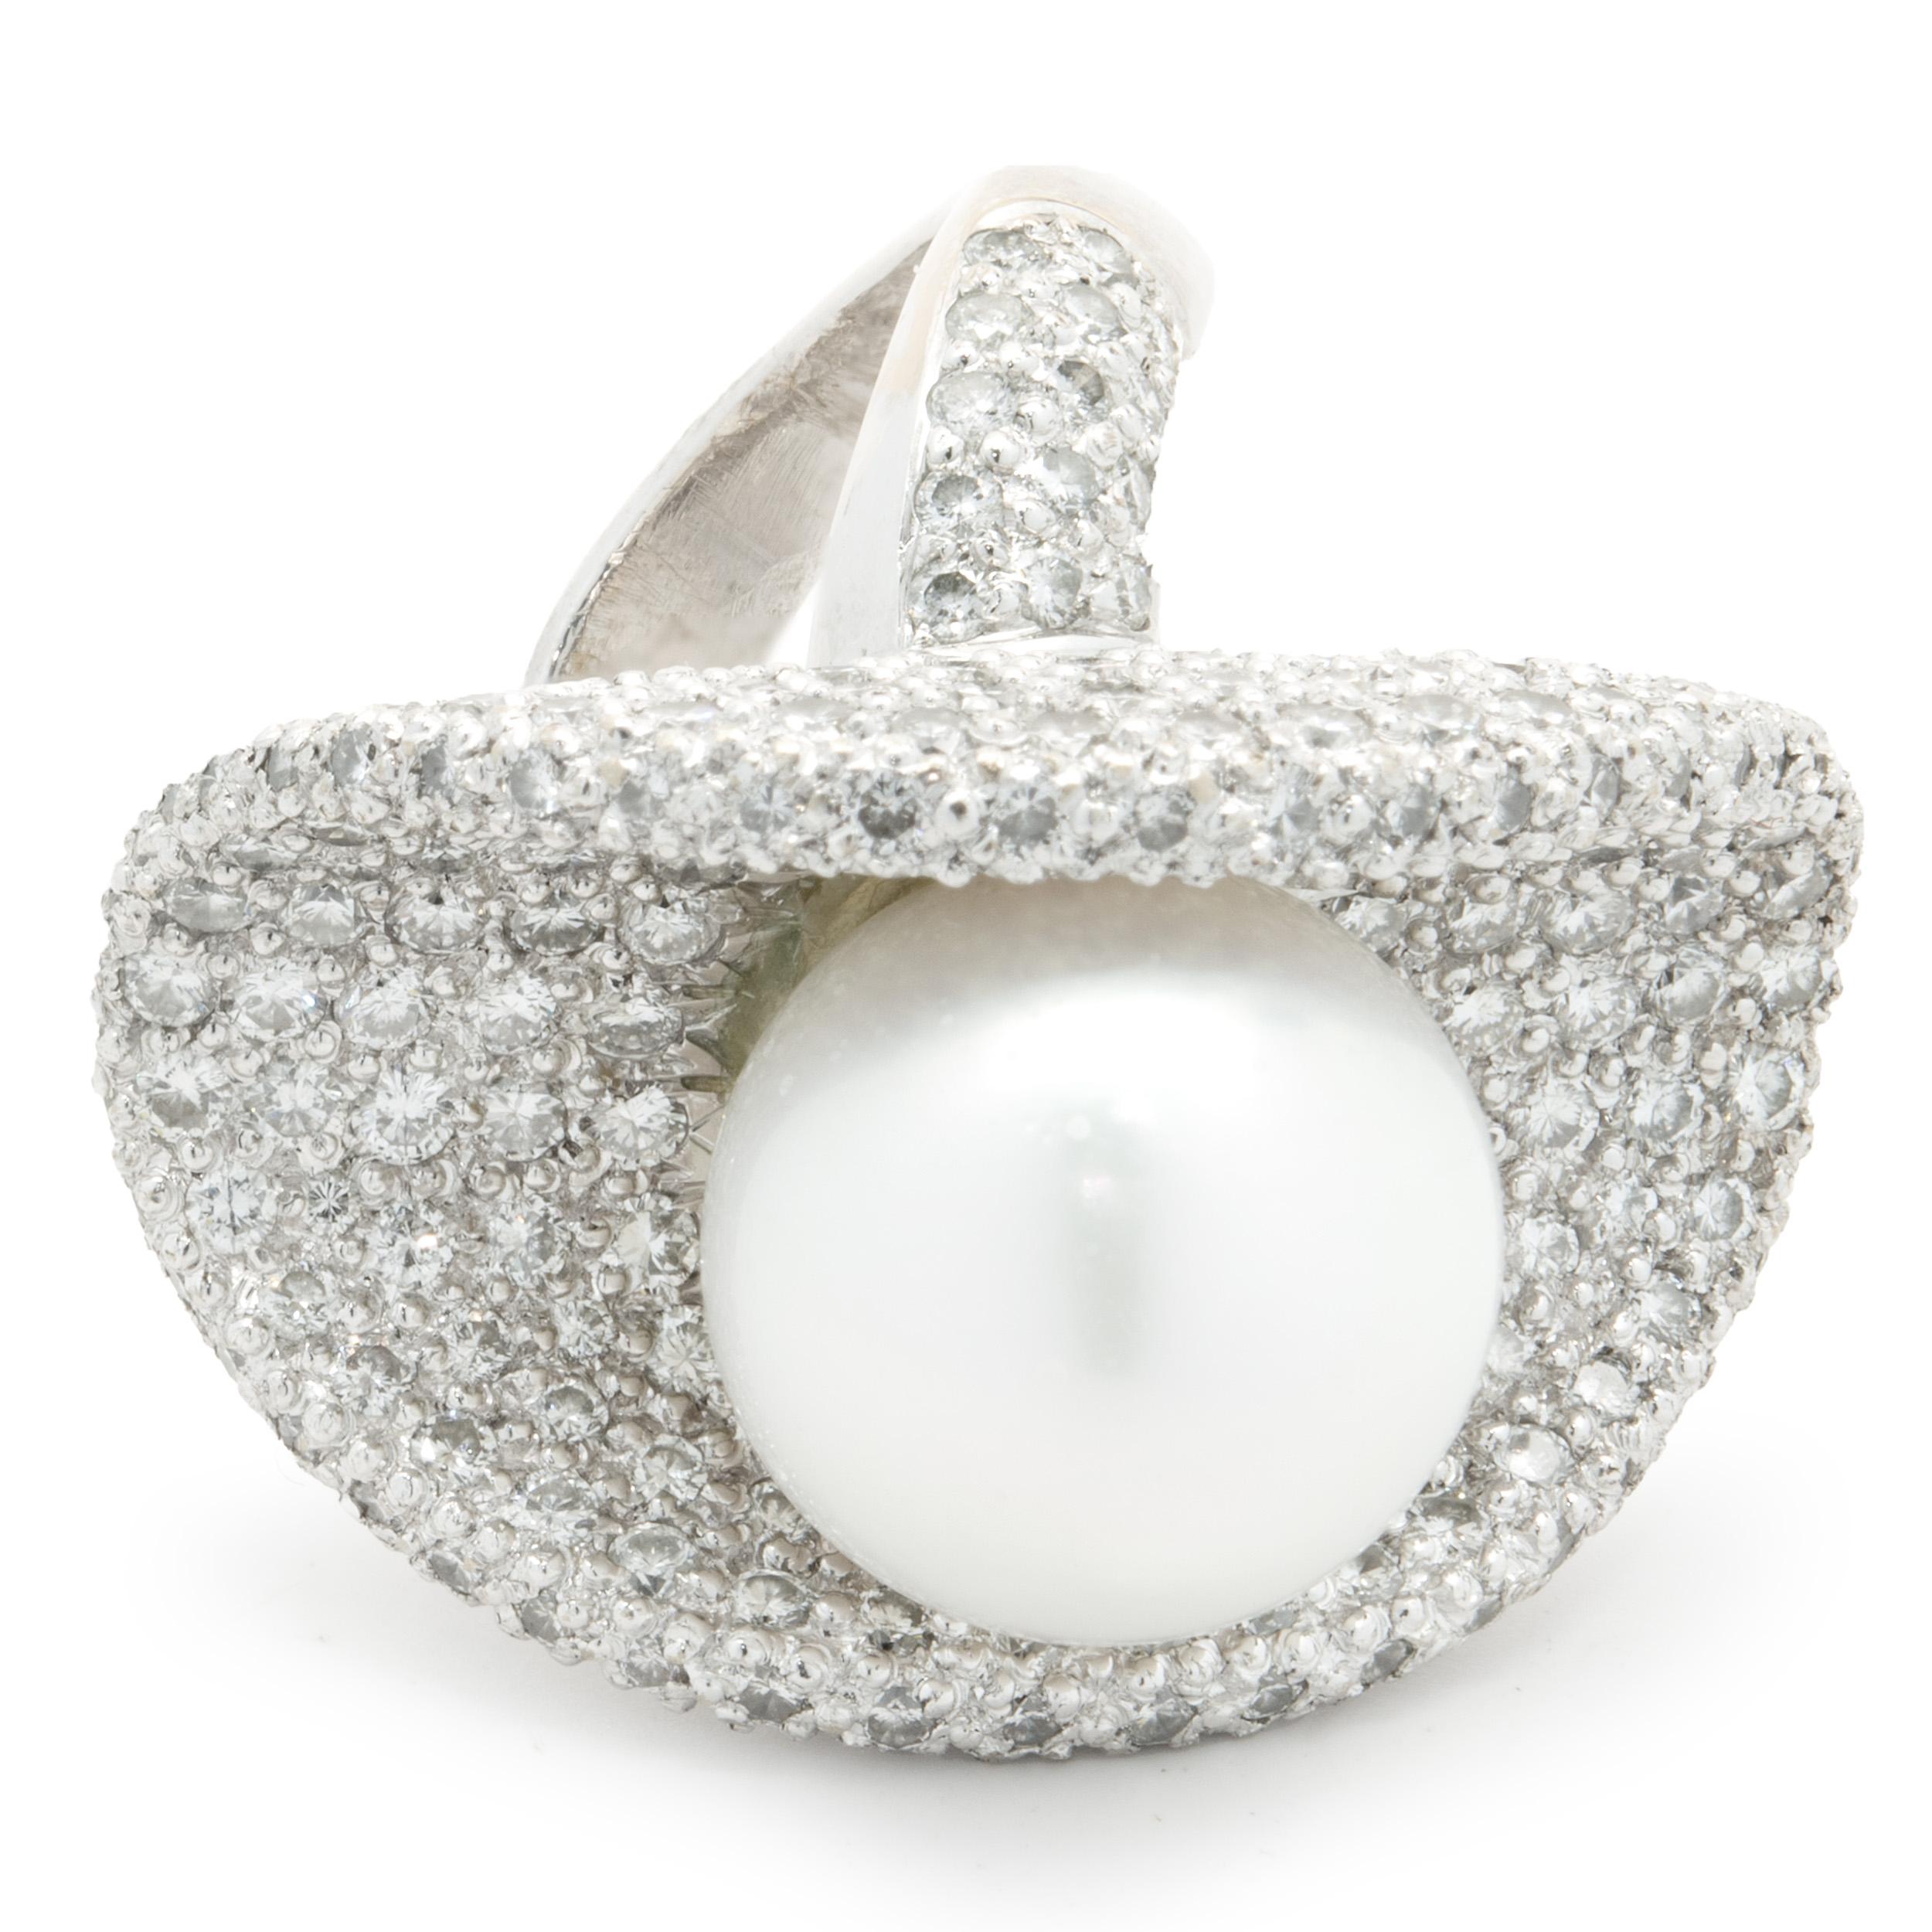 Designer: custom design
Material: 18K white gold 
Earrings:
Diamond: 400 round brilliant cut = 16.00cttw
Color: G
Clarity: VS1-2
Ring:
Diamond: 274 round brilliant cut = 5.48cttw
Color: G
Clarity: VS1-2
Dimensions: earrings measure 28x21mm, ring top